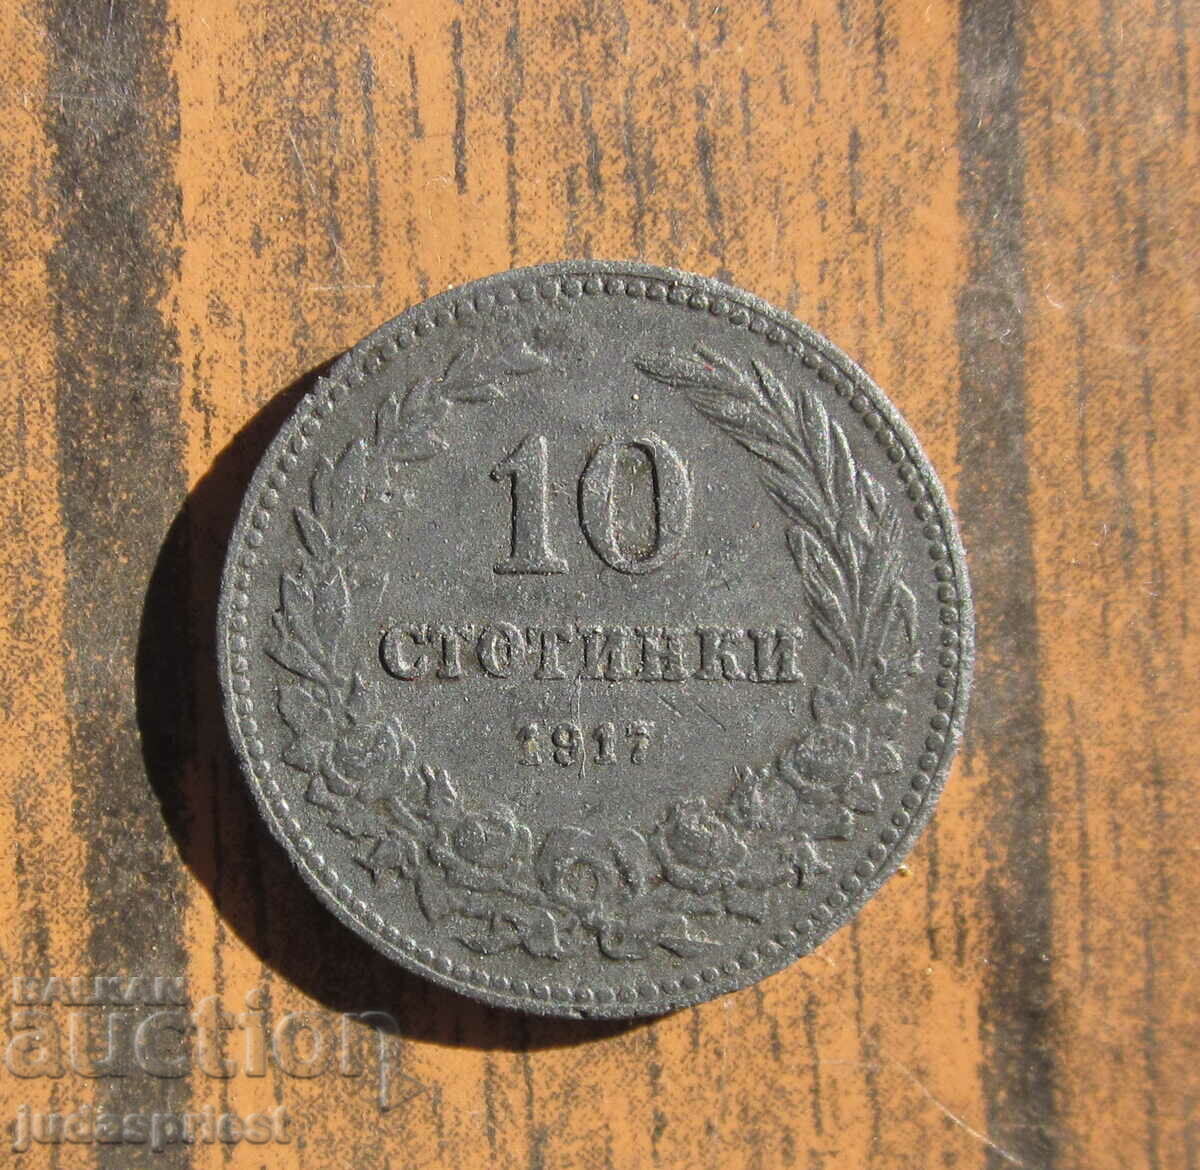 Kingdom of Bulgaria coin 10 stotinki 1917 very good